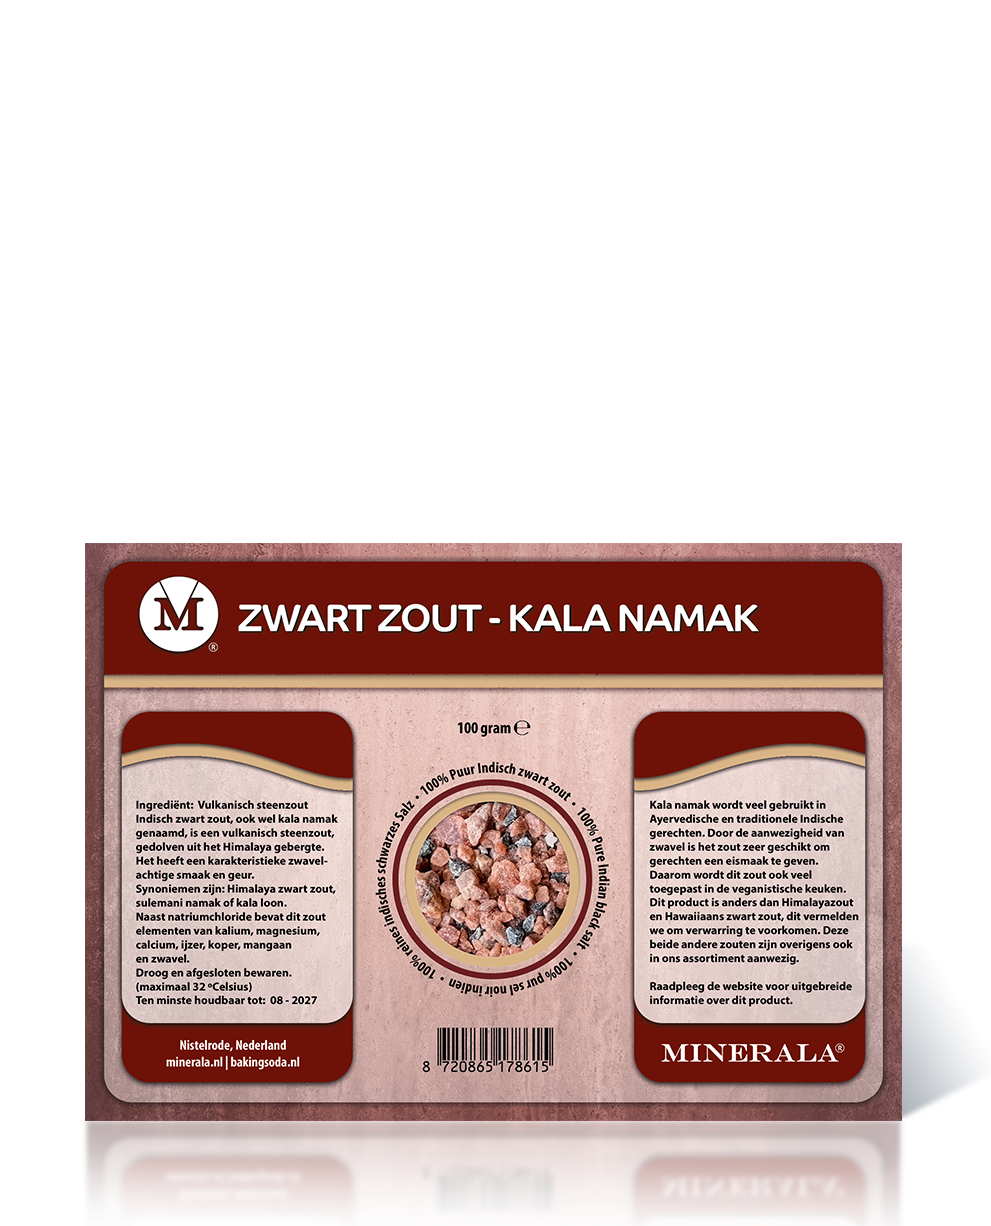 Minerala - Kala Namak - Zwart zout. Baking Soda NL Nistelrode